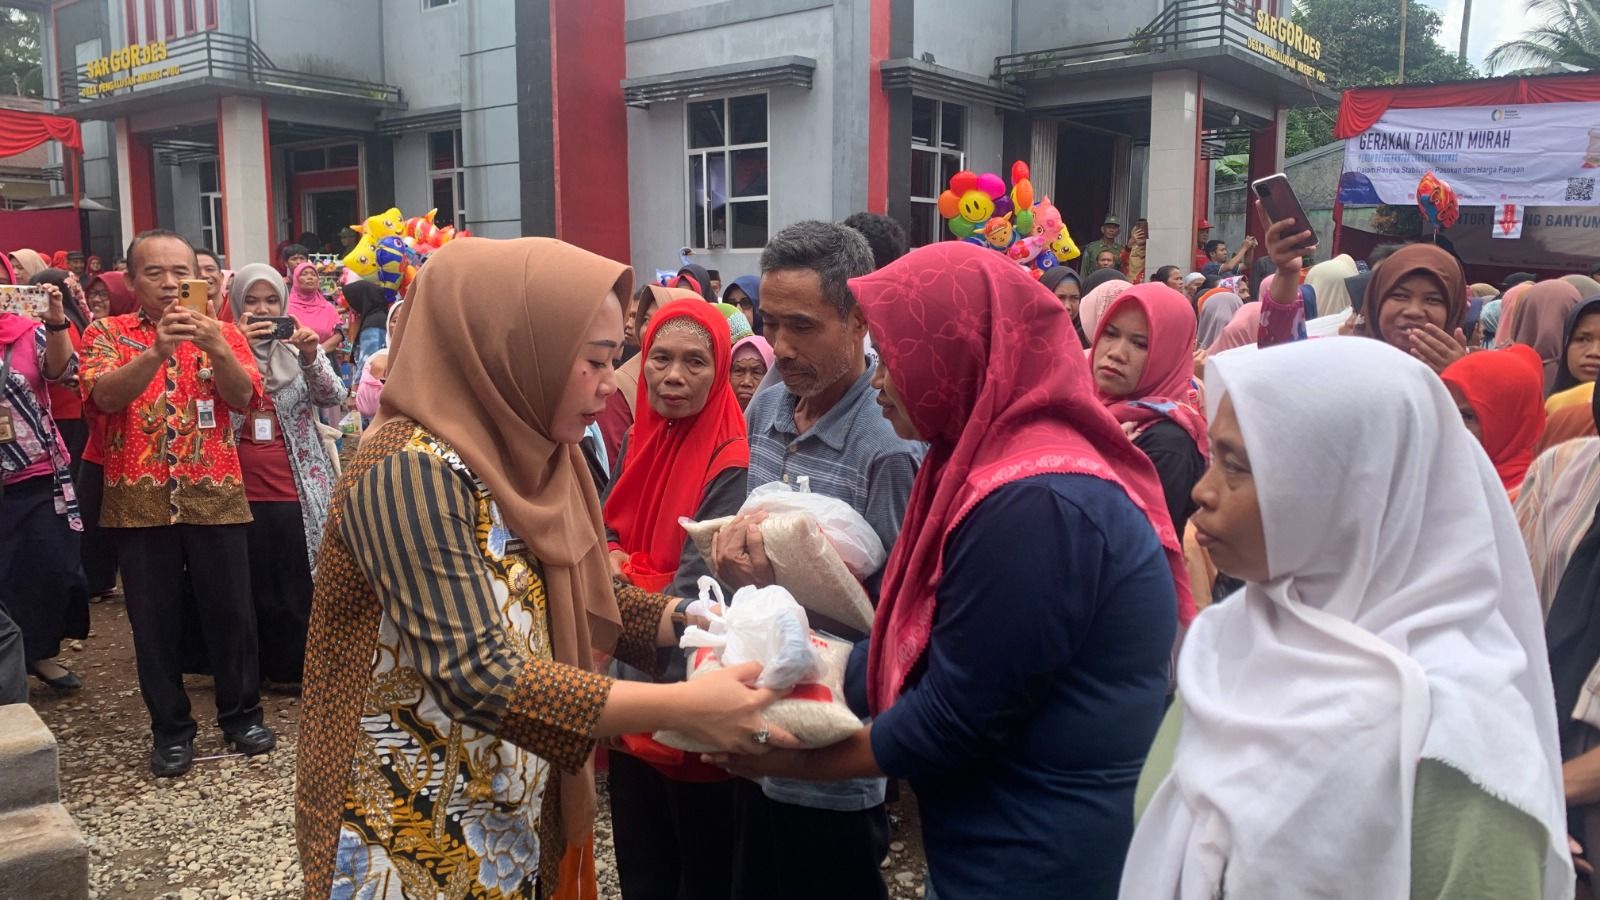 Bupati Tiwi melakukan tinjauan langsung ke Pasar Murah Ramadhan di Desa Pengalusan Kecamatan Mrebet Purbalingga./Dinkominfo Purbalingga